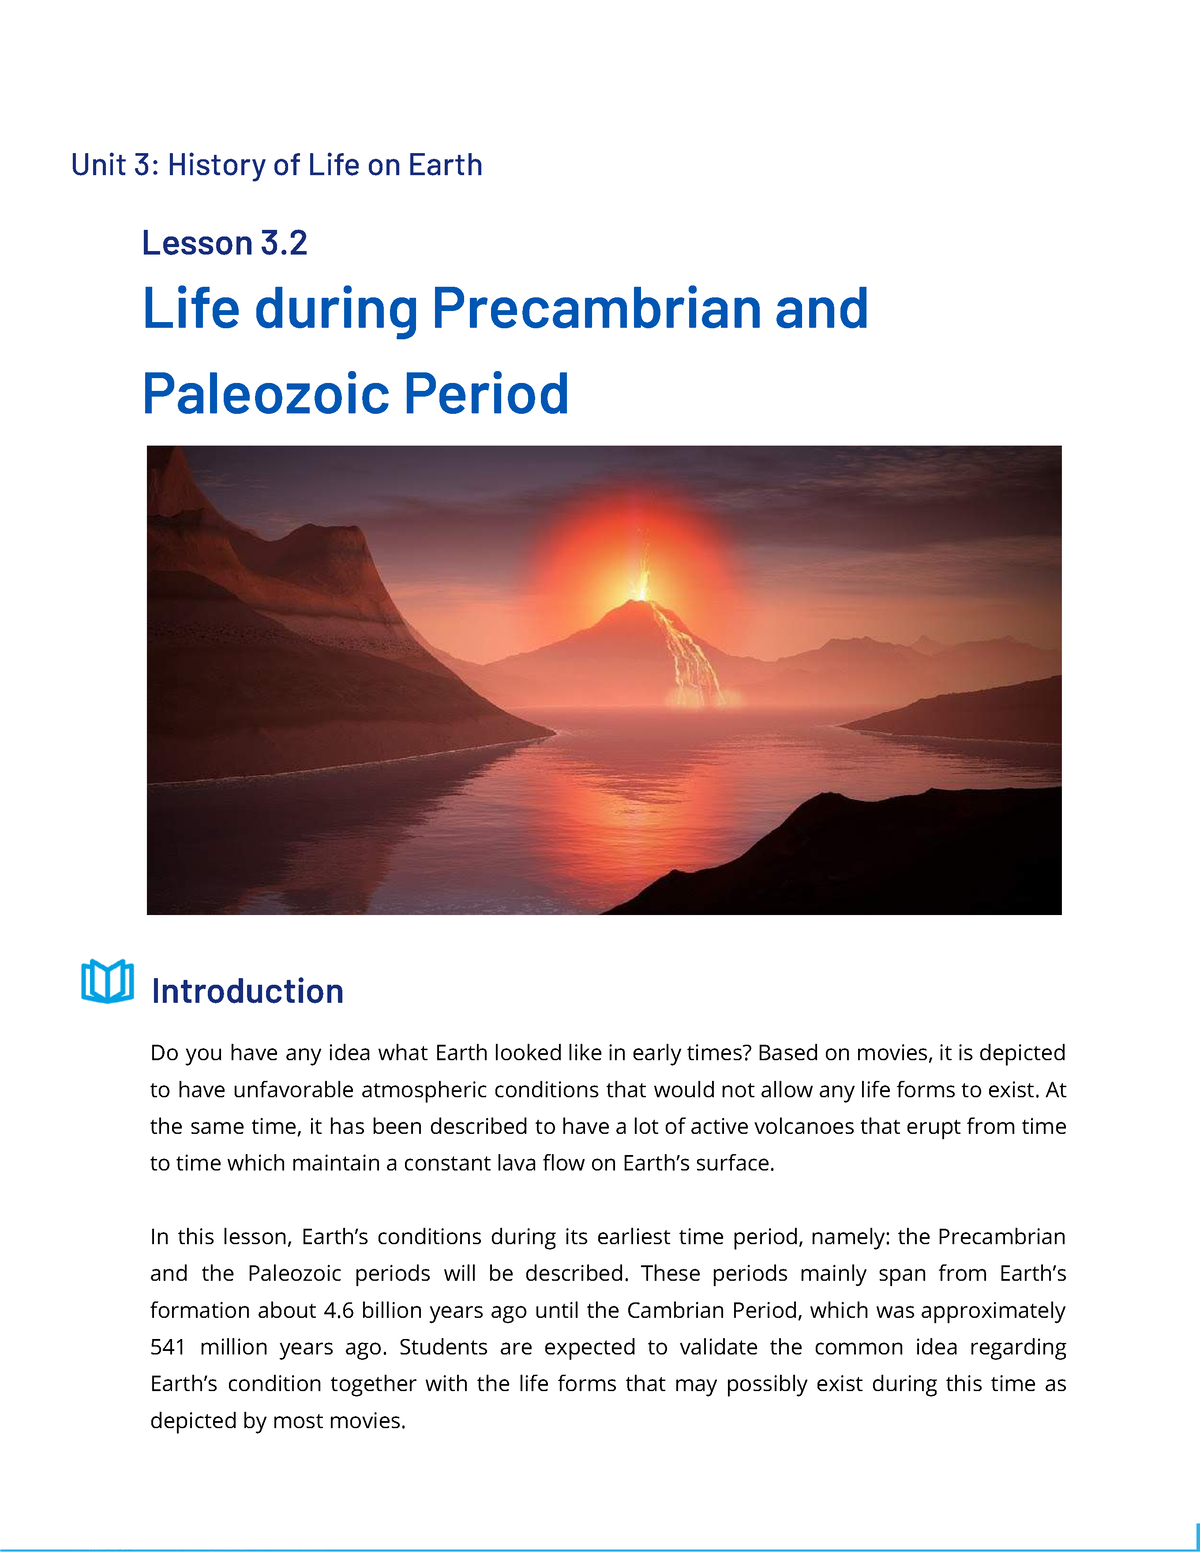 paleozoic era earths surface